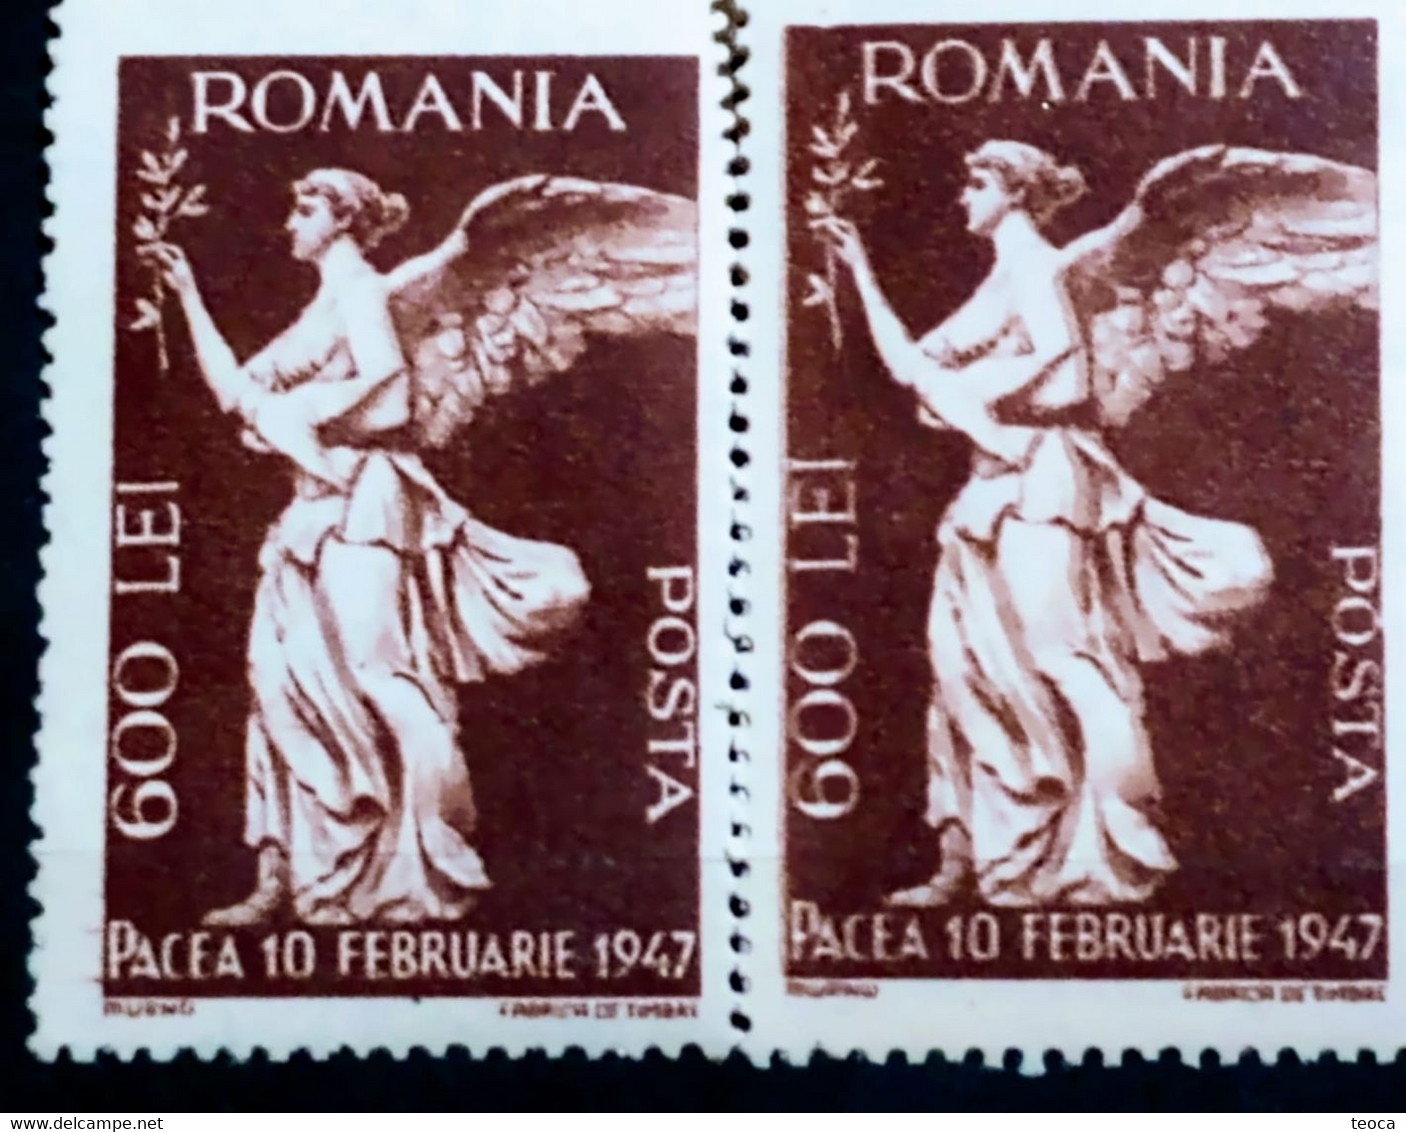 ERRORS Romania 1947 # Mi 1025 Printed With Broken Frame, Blurred Image Unused - Varietà & Curiosità